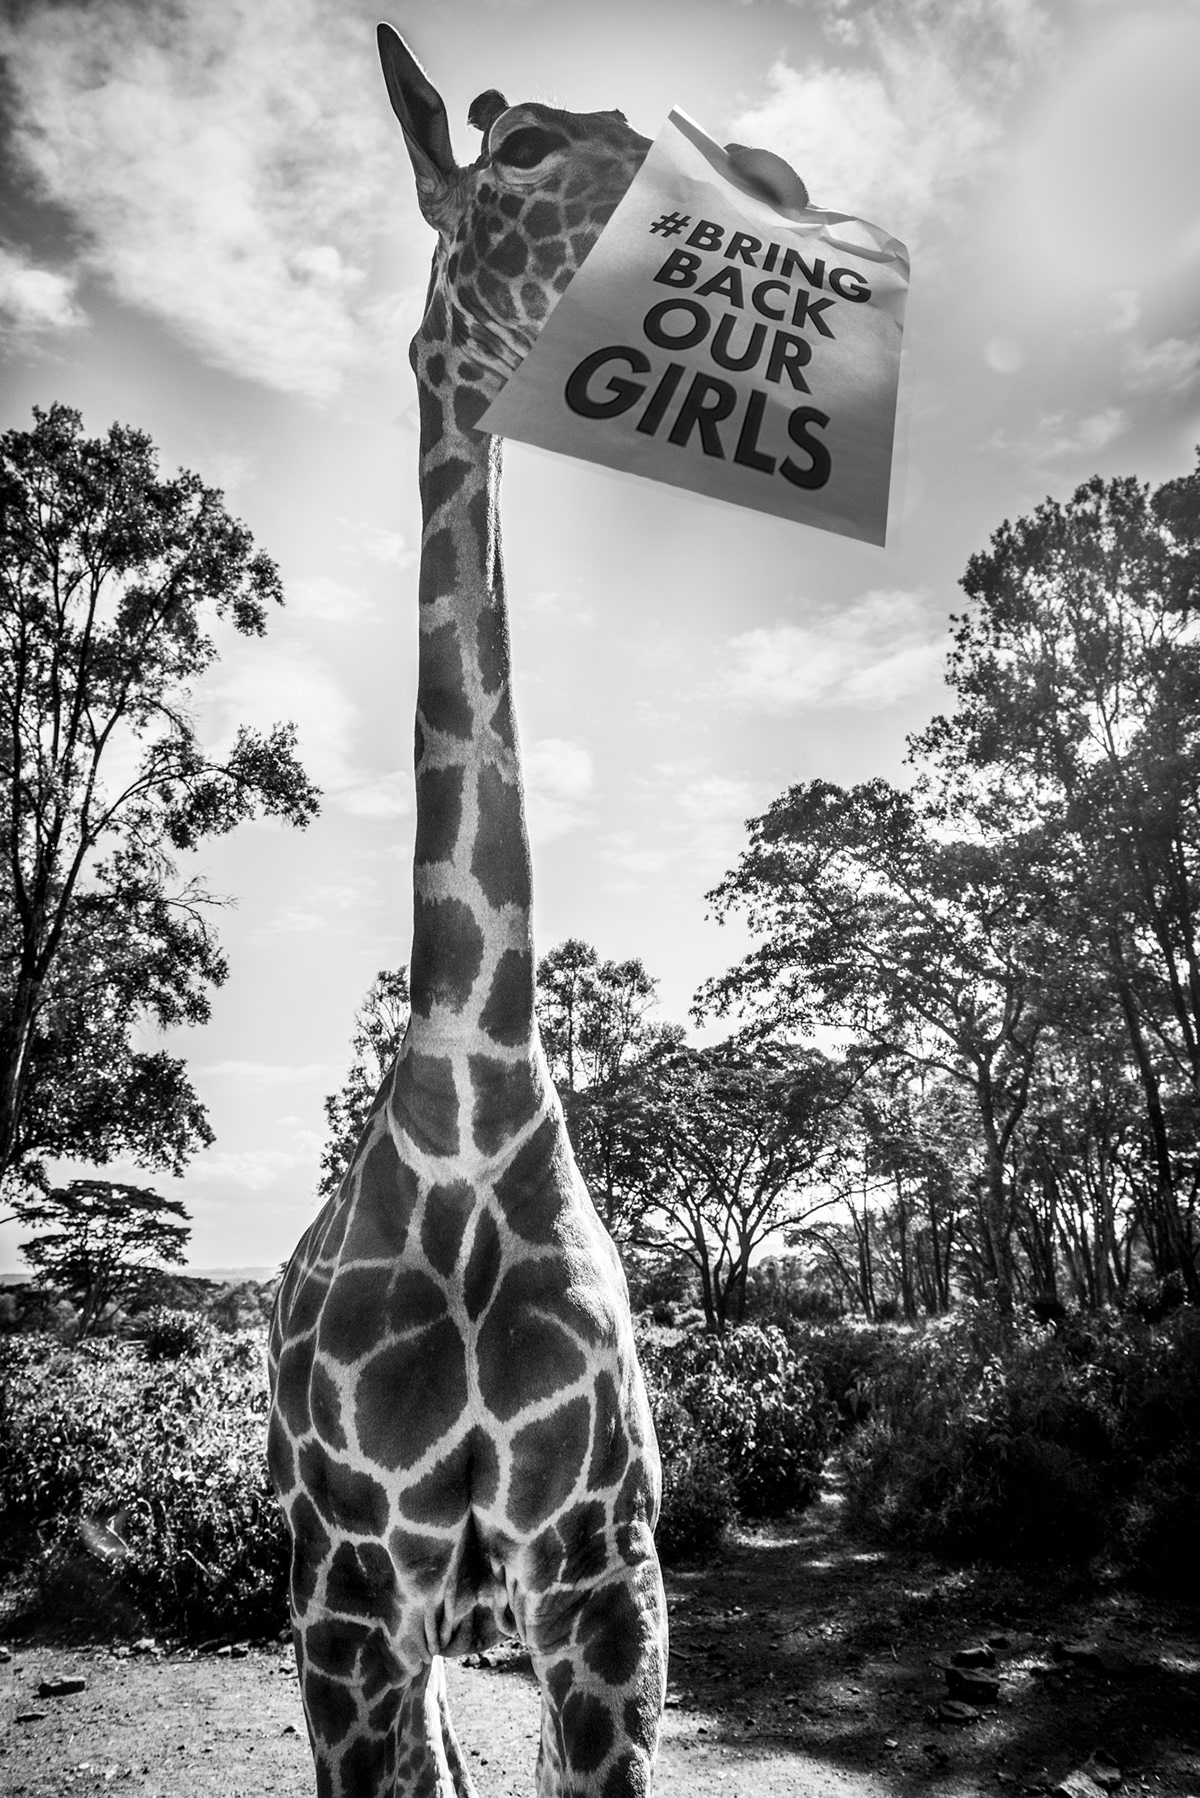 #bringbackourgirls girafe giraffe animal africa zebra elephants